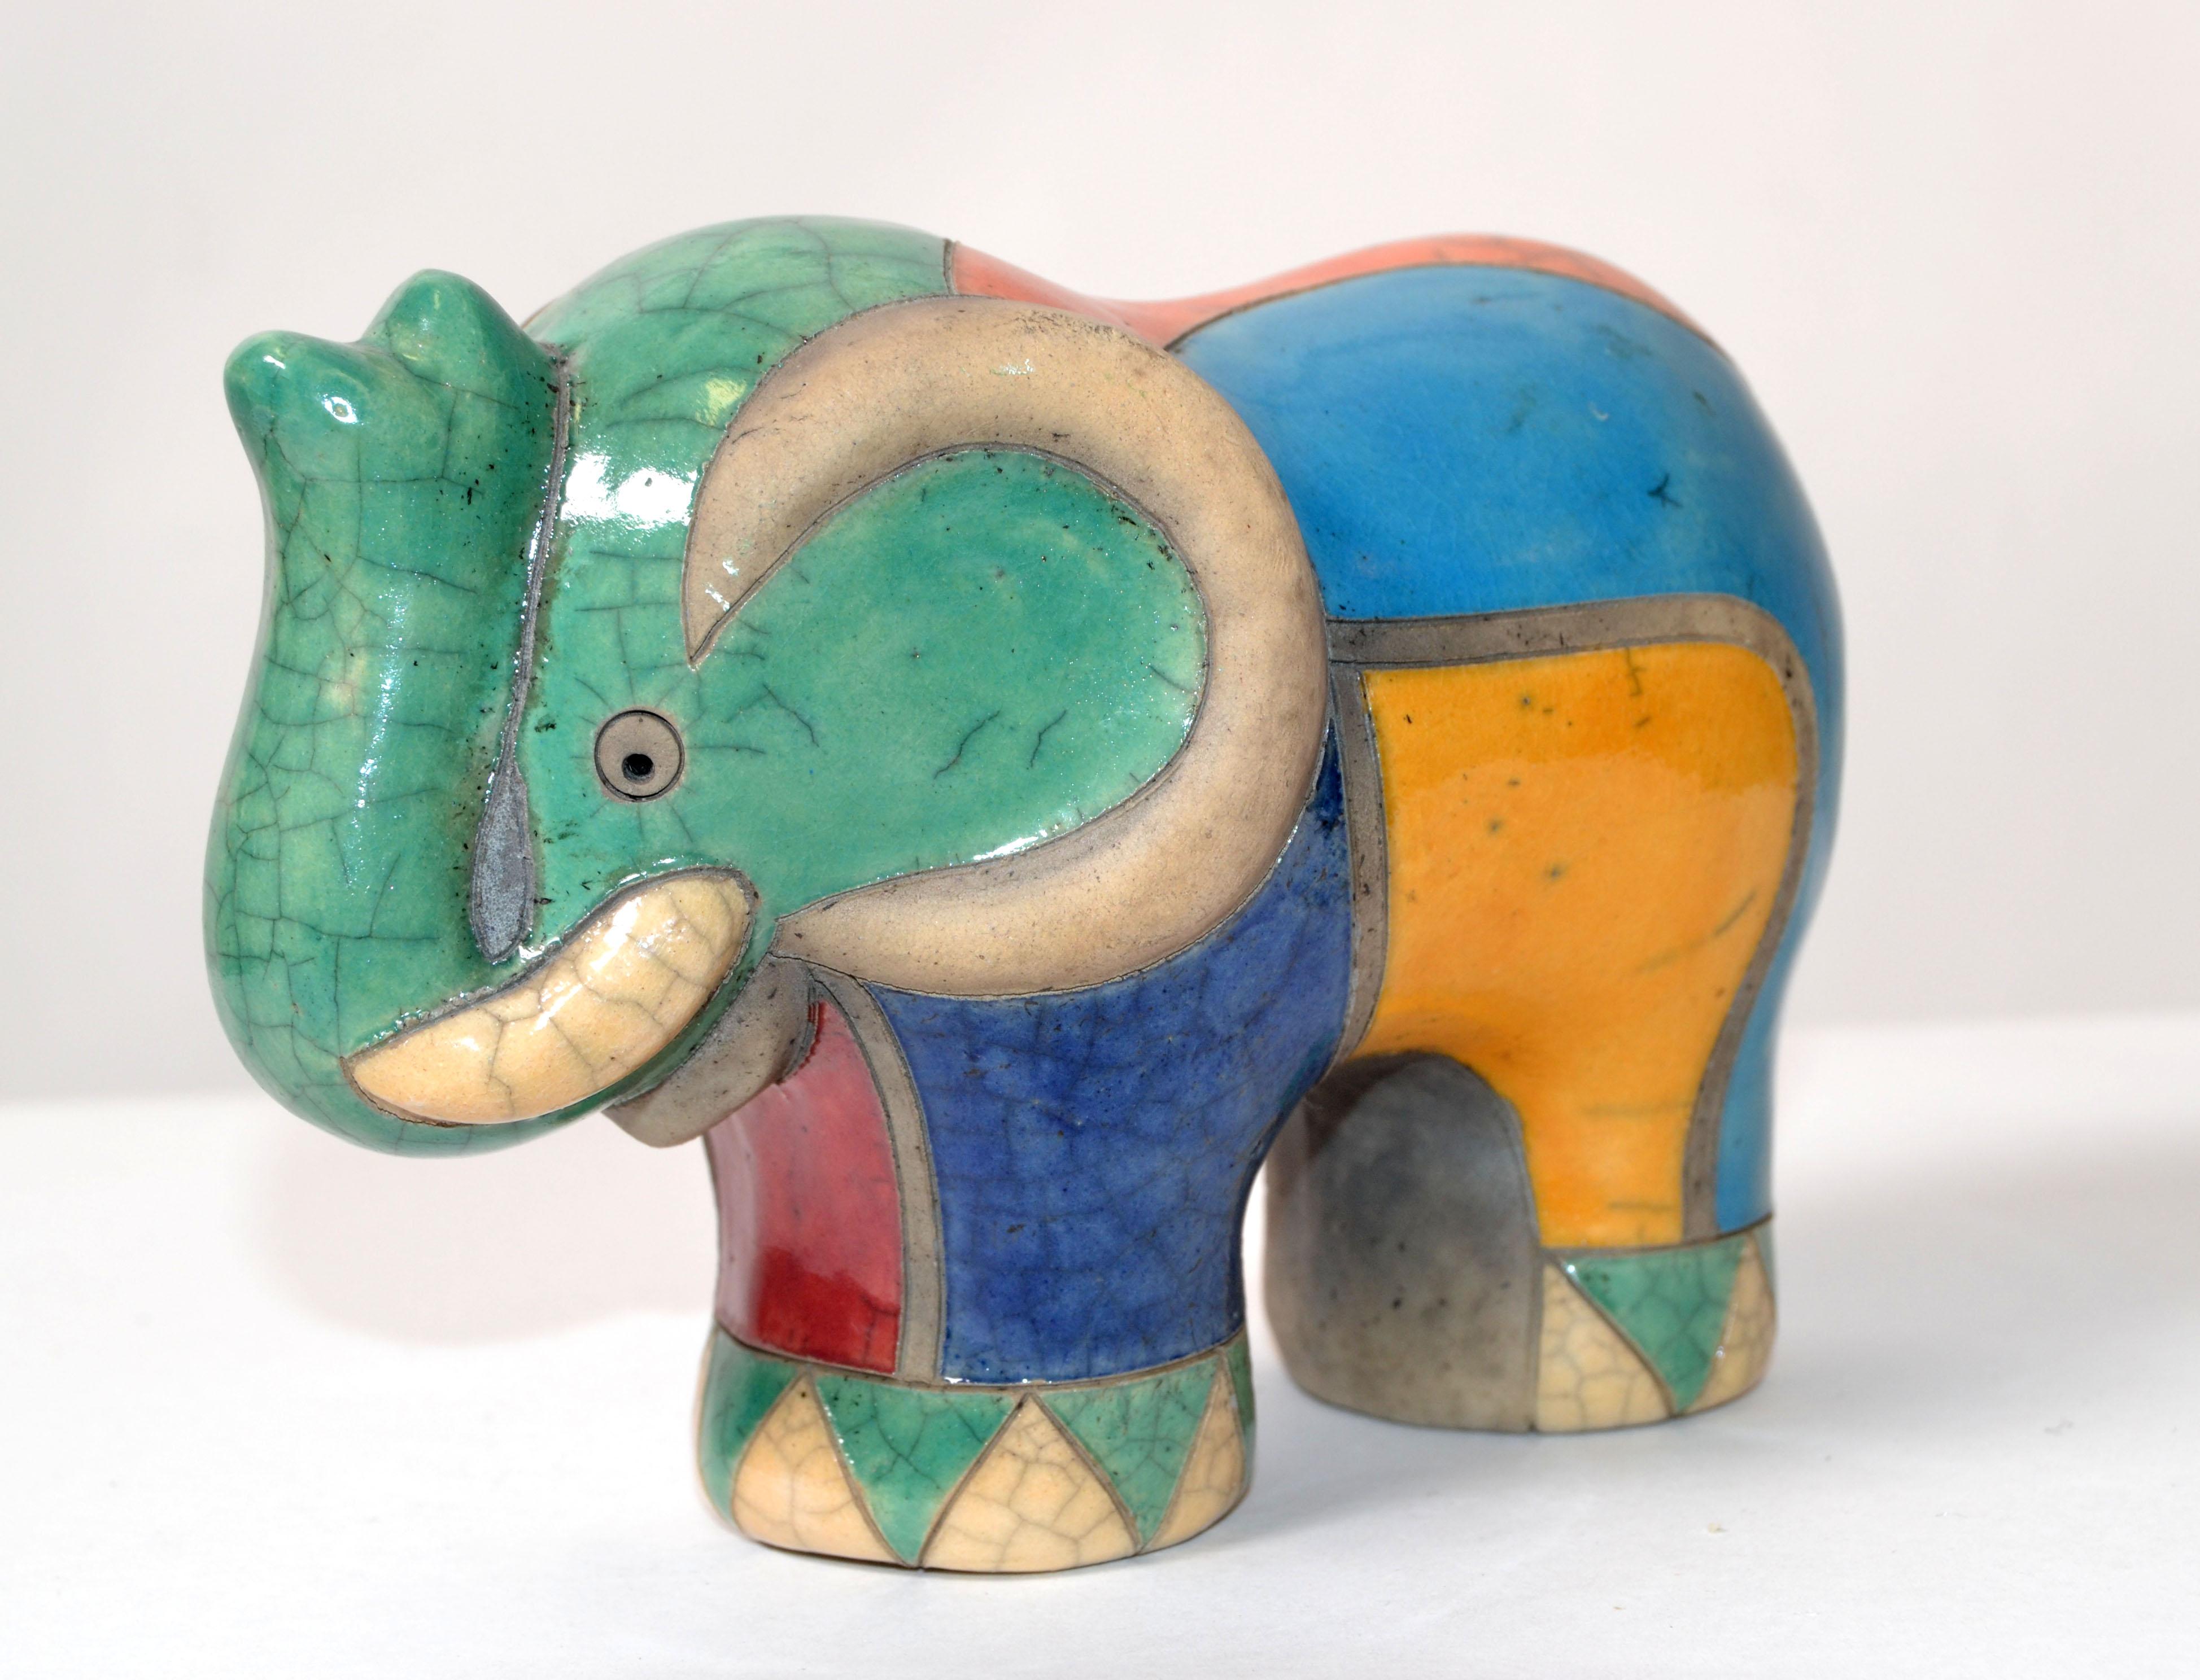 Luca CL Marked bunte Keramik Elefanten Skulptur Mid-Century Modern Italien 1970.
Markiert an der Basis. CL Luca.
Wunderschöne handgefertigte Tierskulptur.